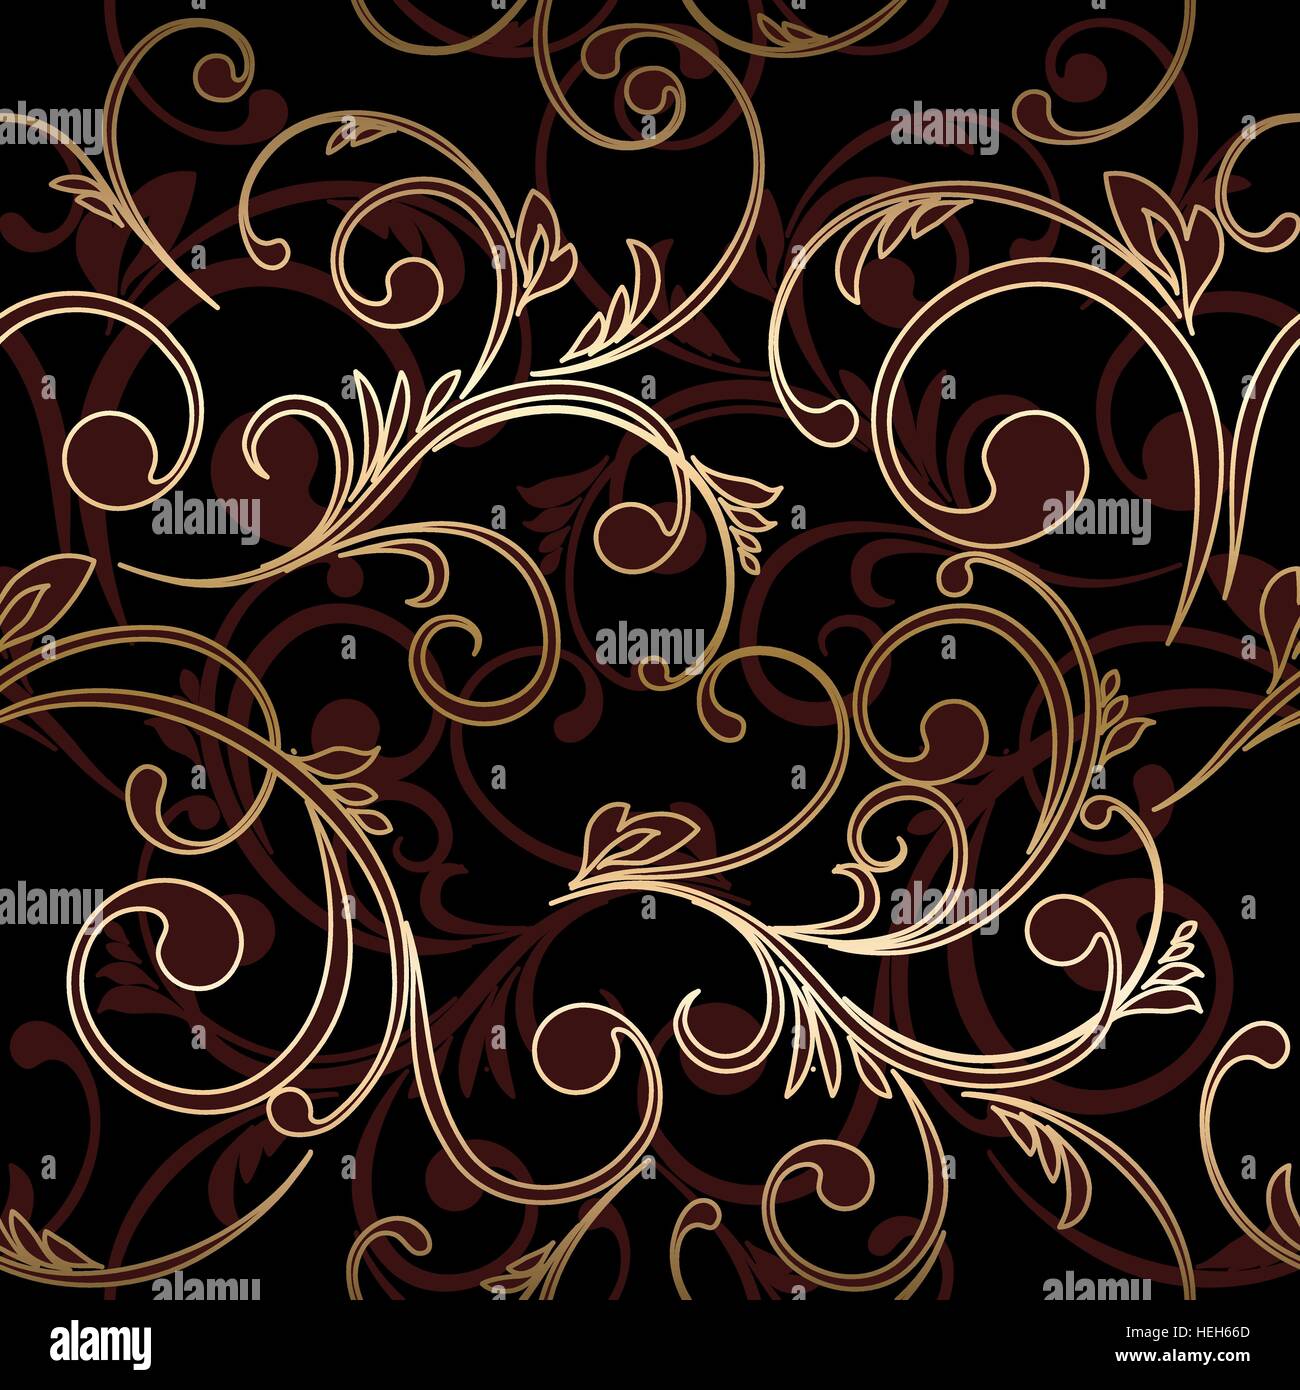 Damask seamless floral pattern Royal wallpaper Stock Vector Image  Art   Alamy